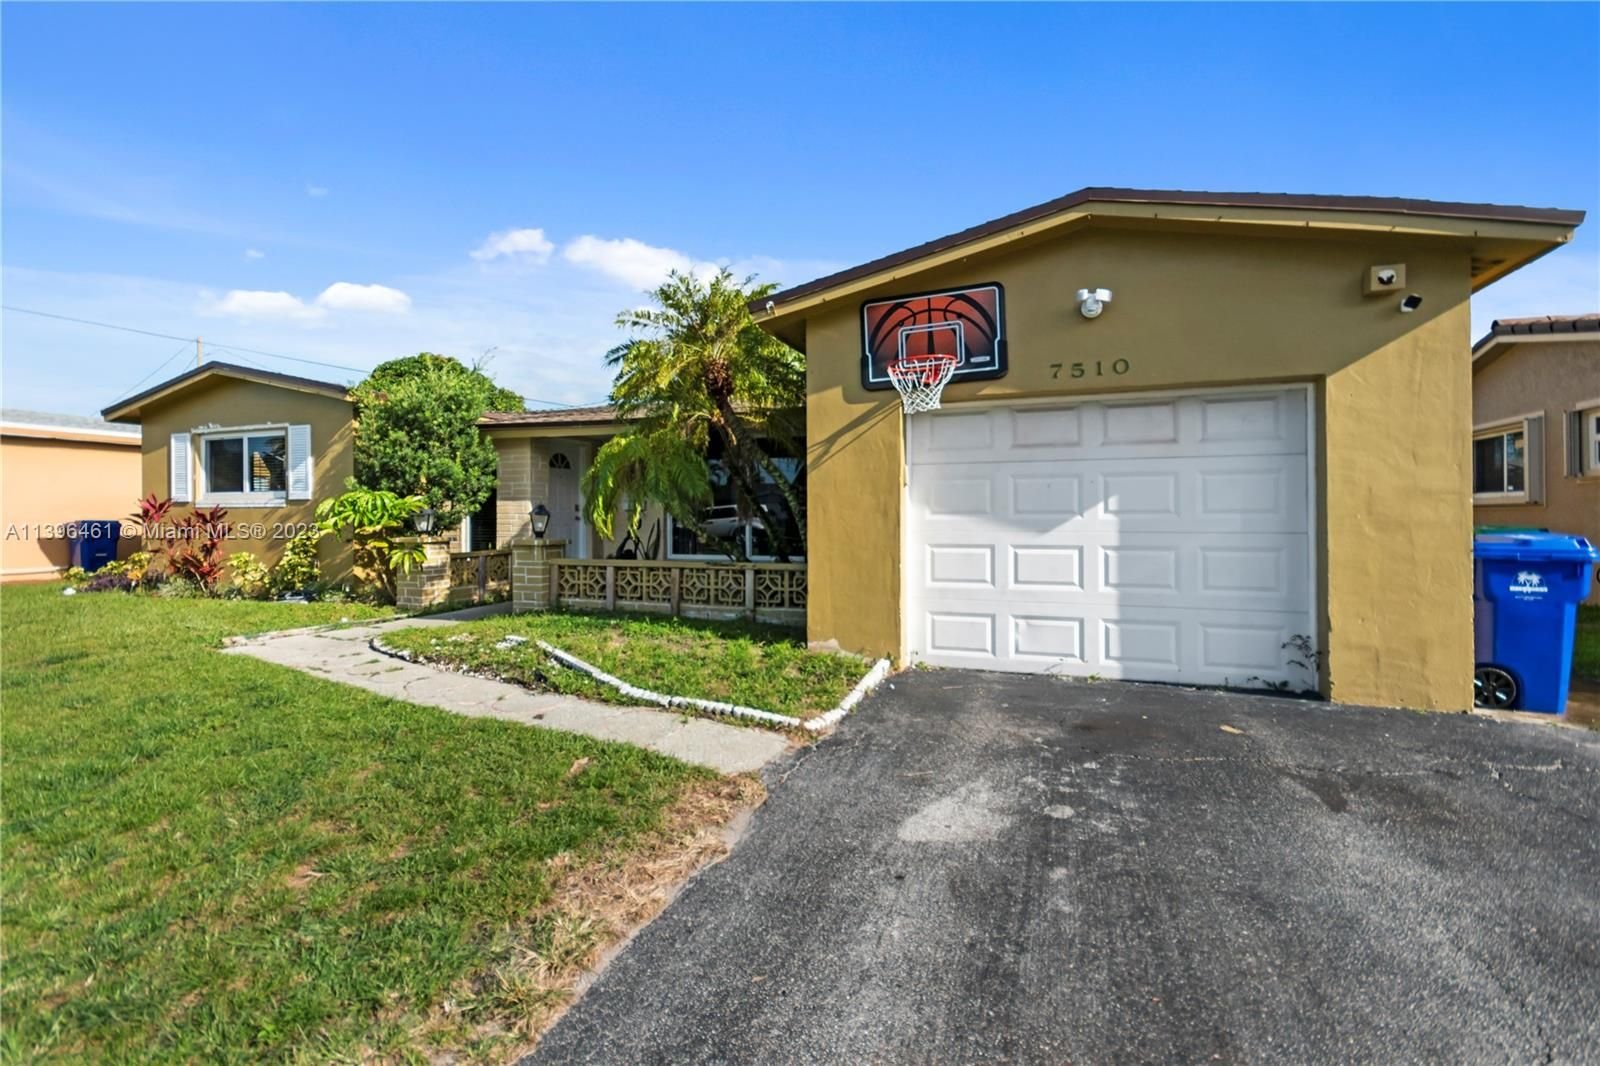 Real estate property located at 7510 Biltmore Blvd, Broward County, Miramar, FL